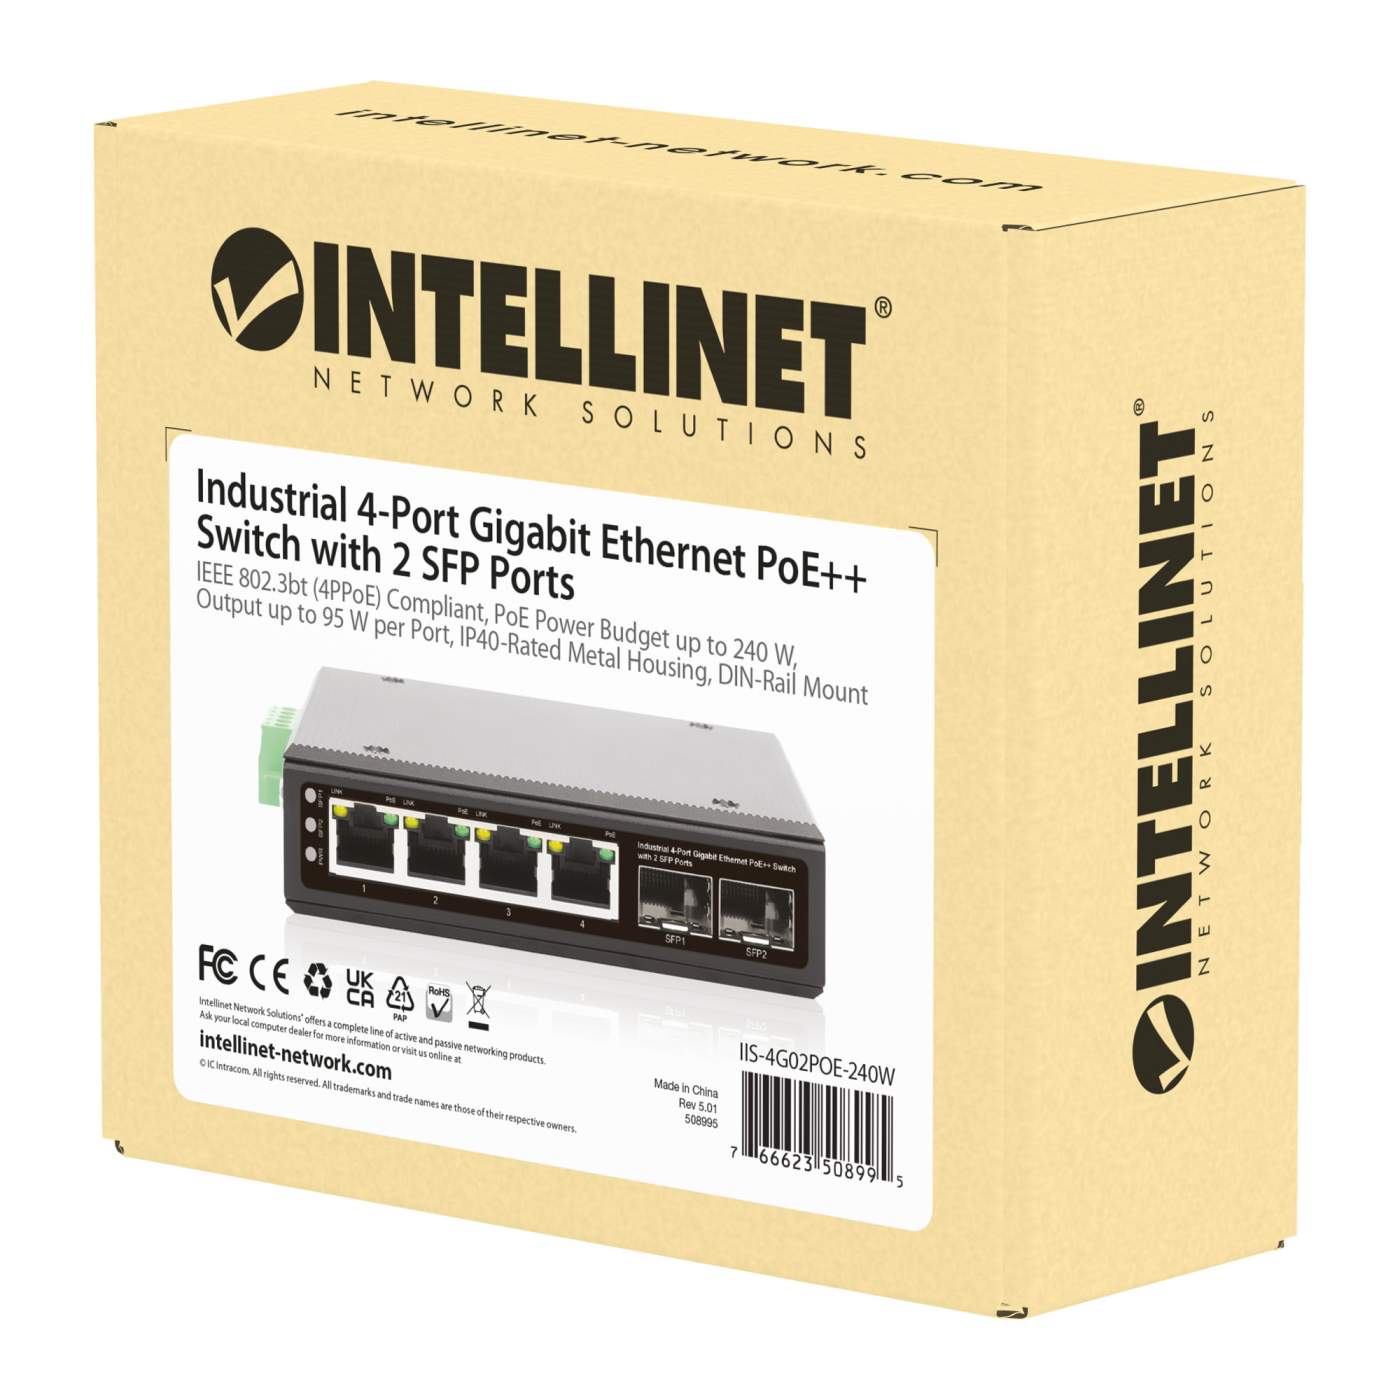 8-Port Gigabit Ethernet PoE Switch with Metal Casing, Desktop or Wall